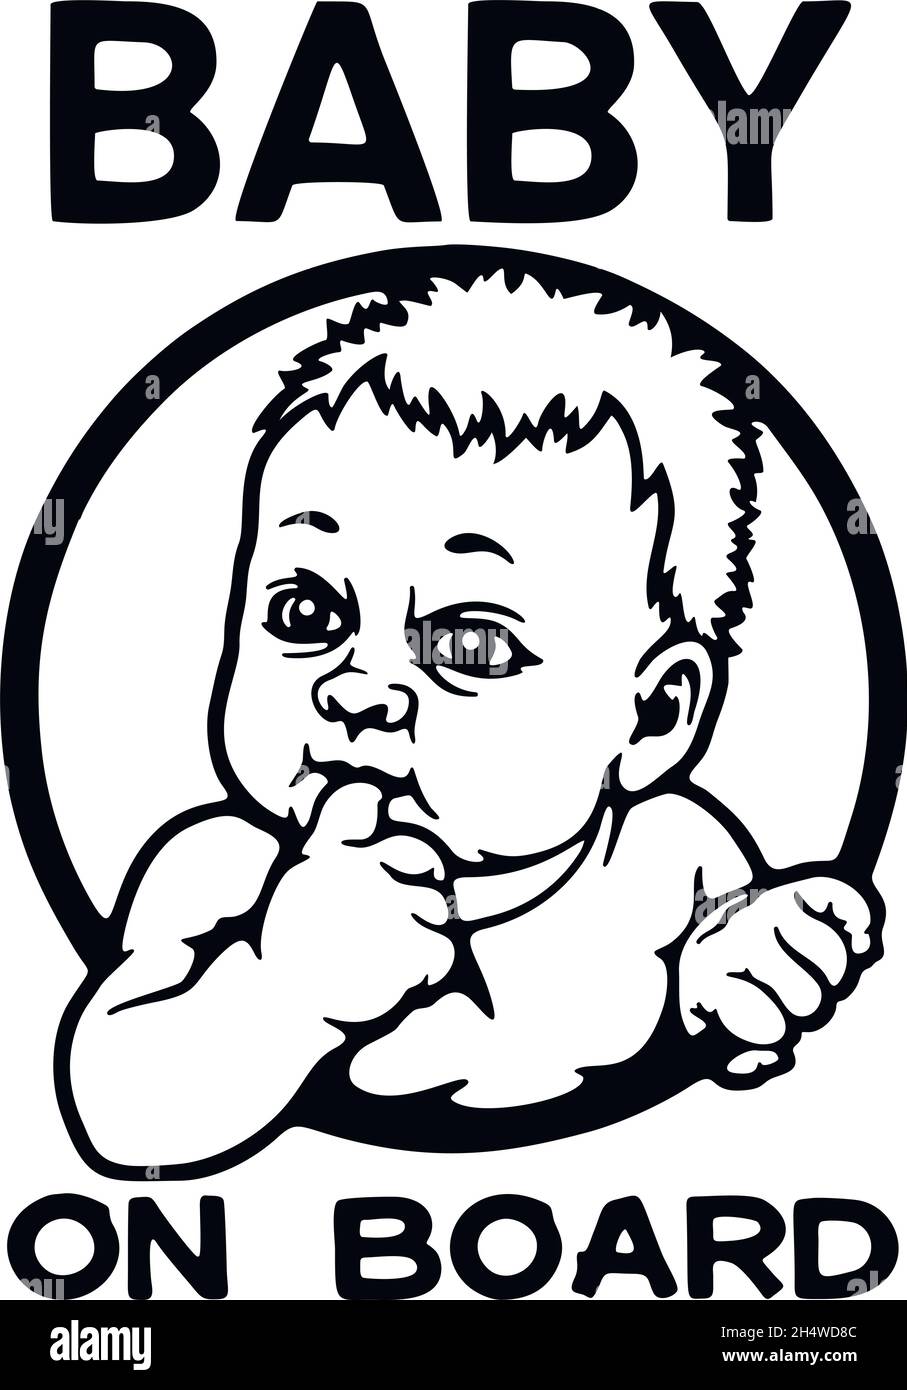 Baby on board sign icon. Child safety sticker warning emblem. Baby safety  design illustration Stock Vector Image & Art - Alamy